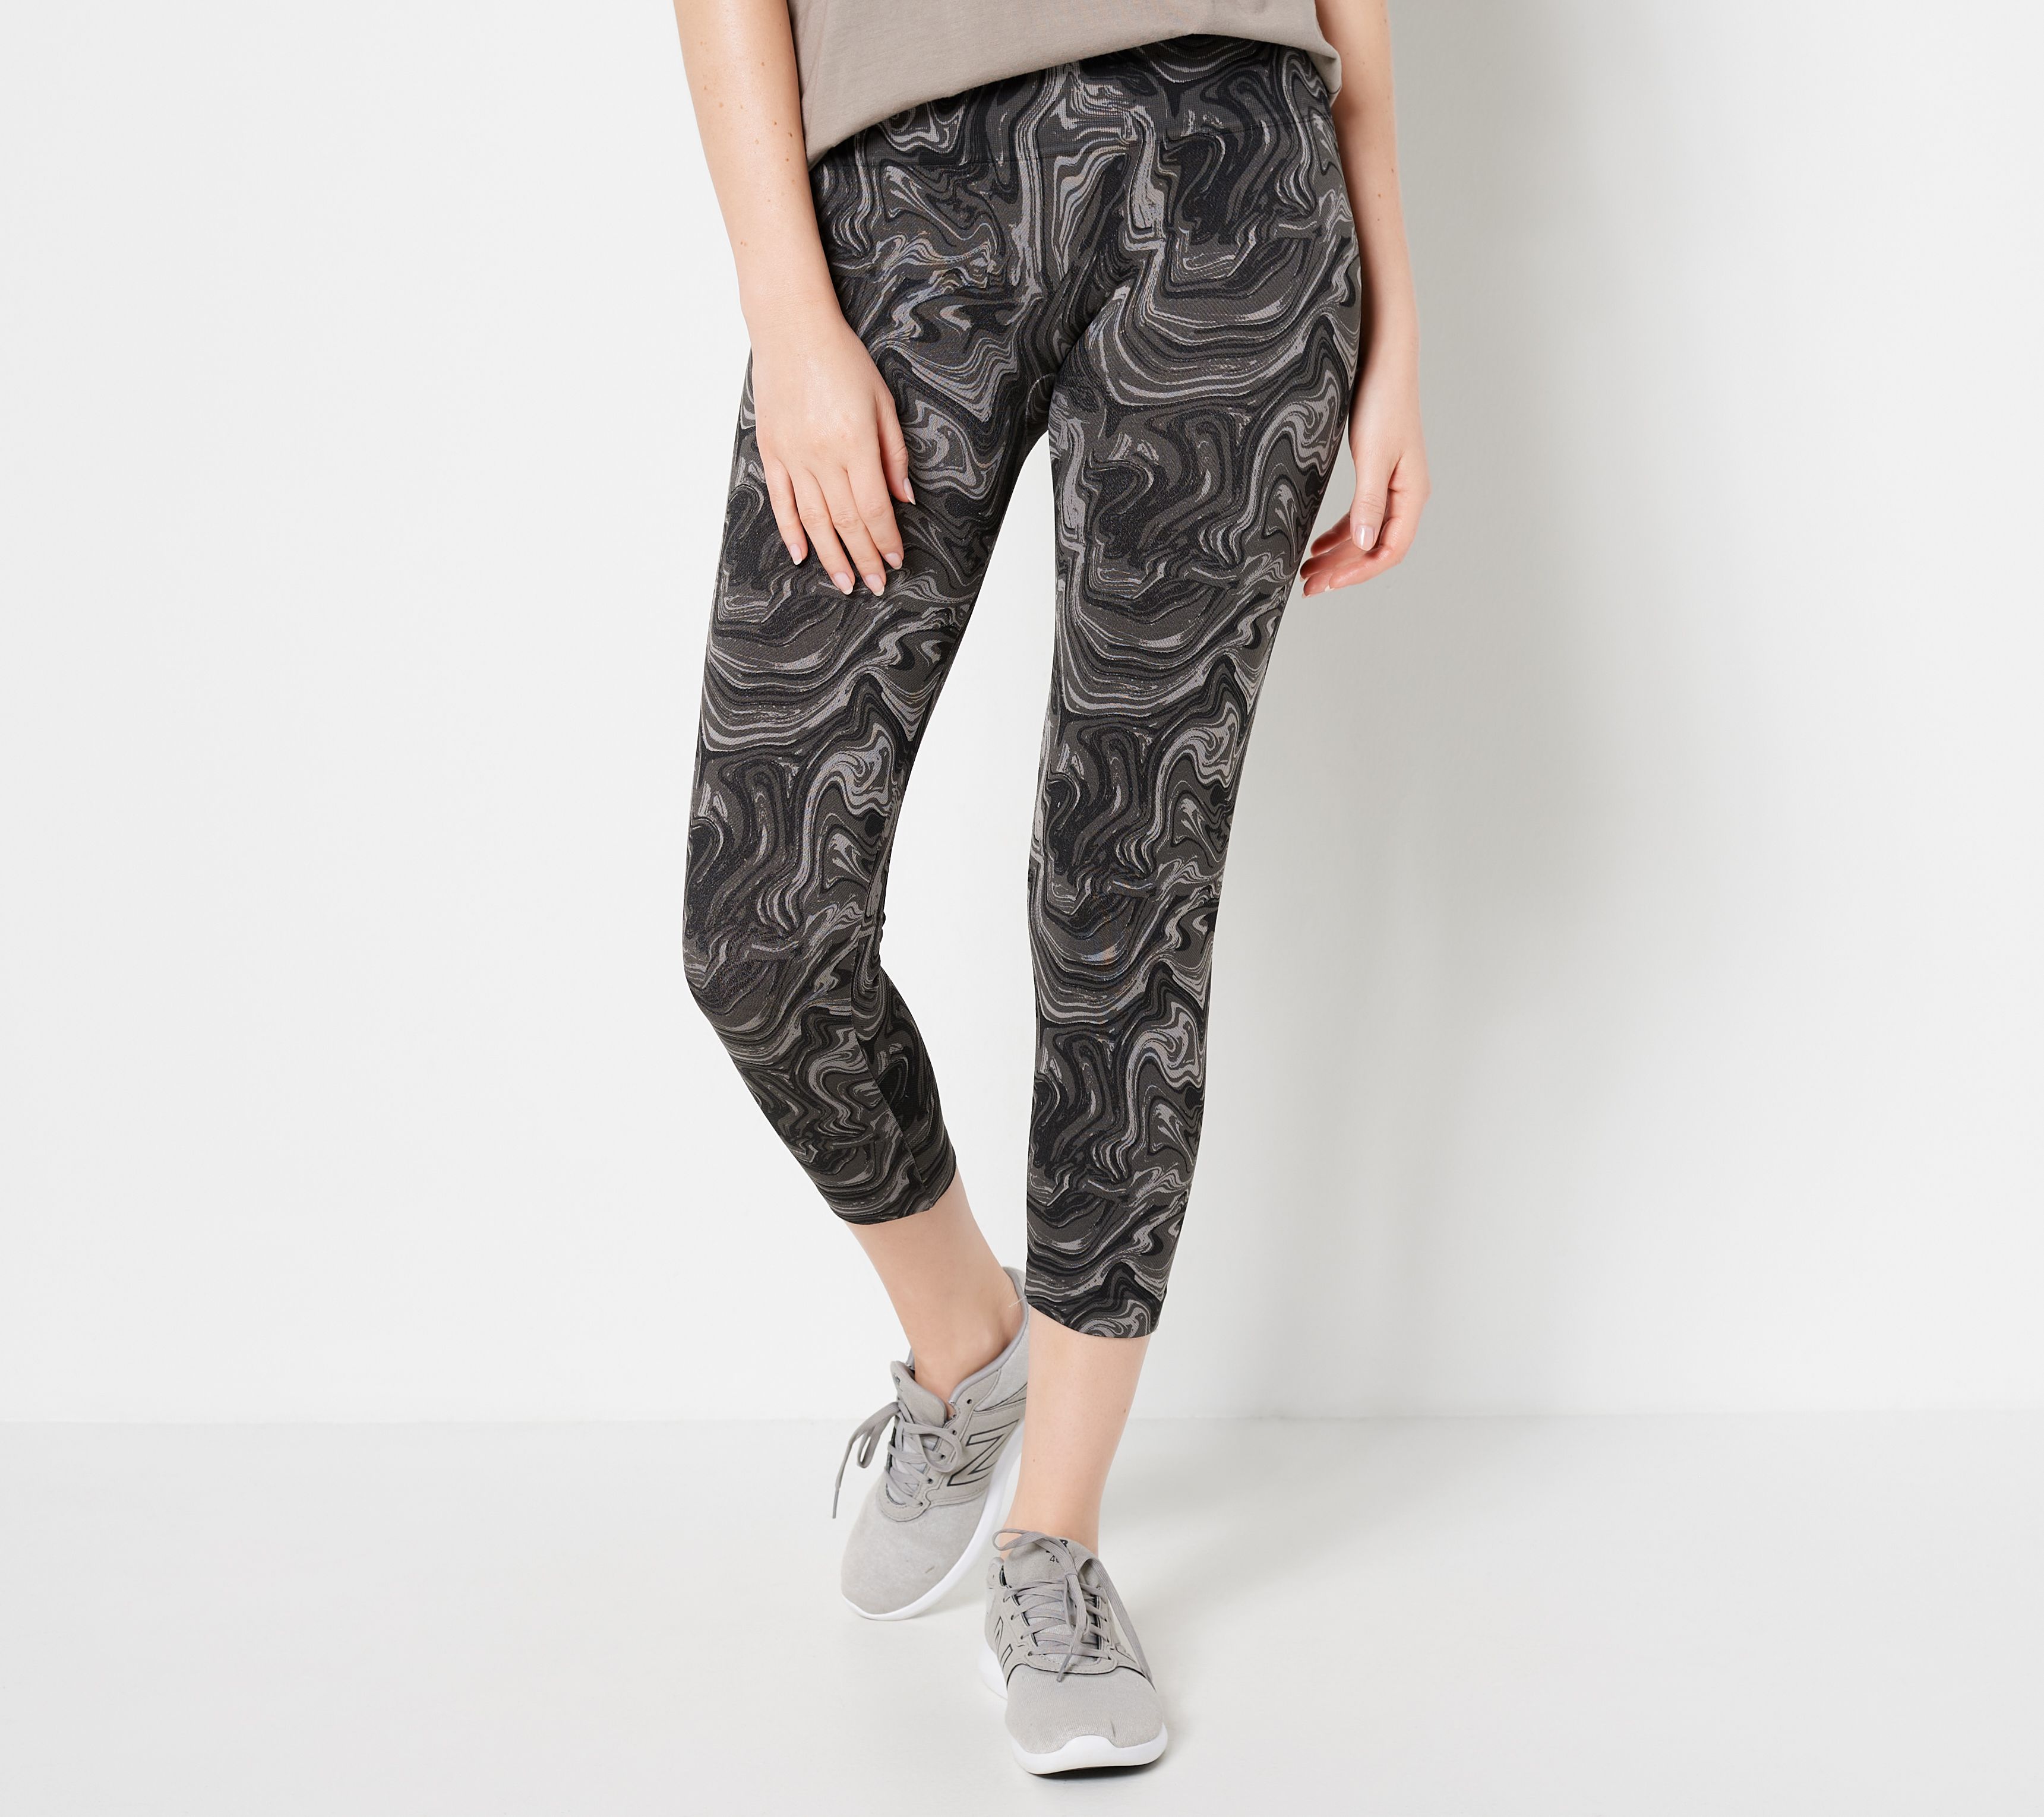  Grey Printed Yoga Leggings for Women Seamless Tummy